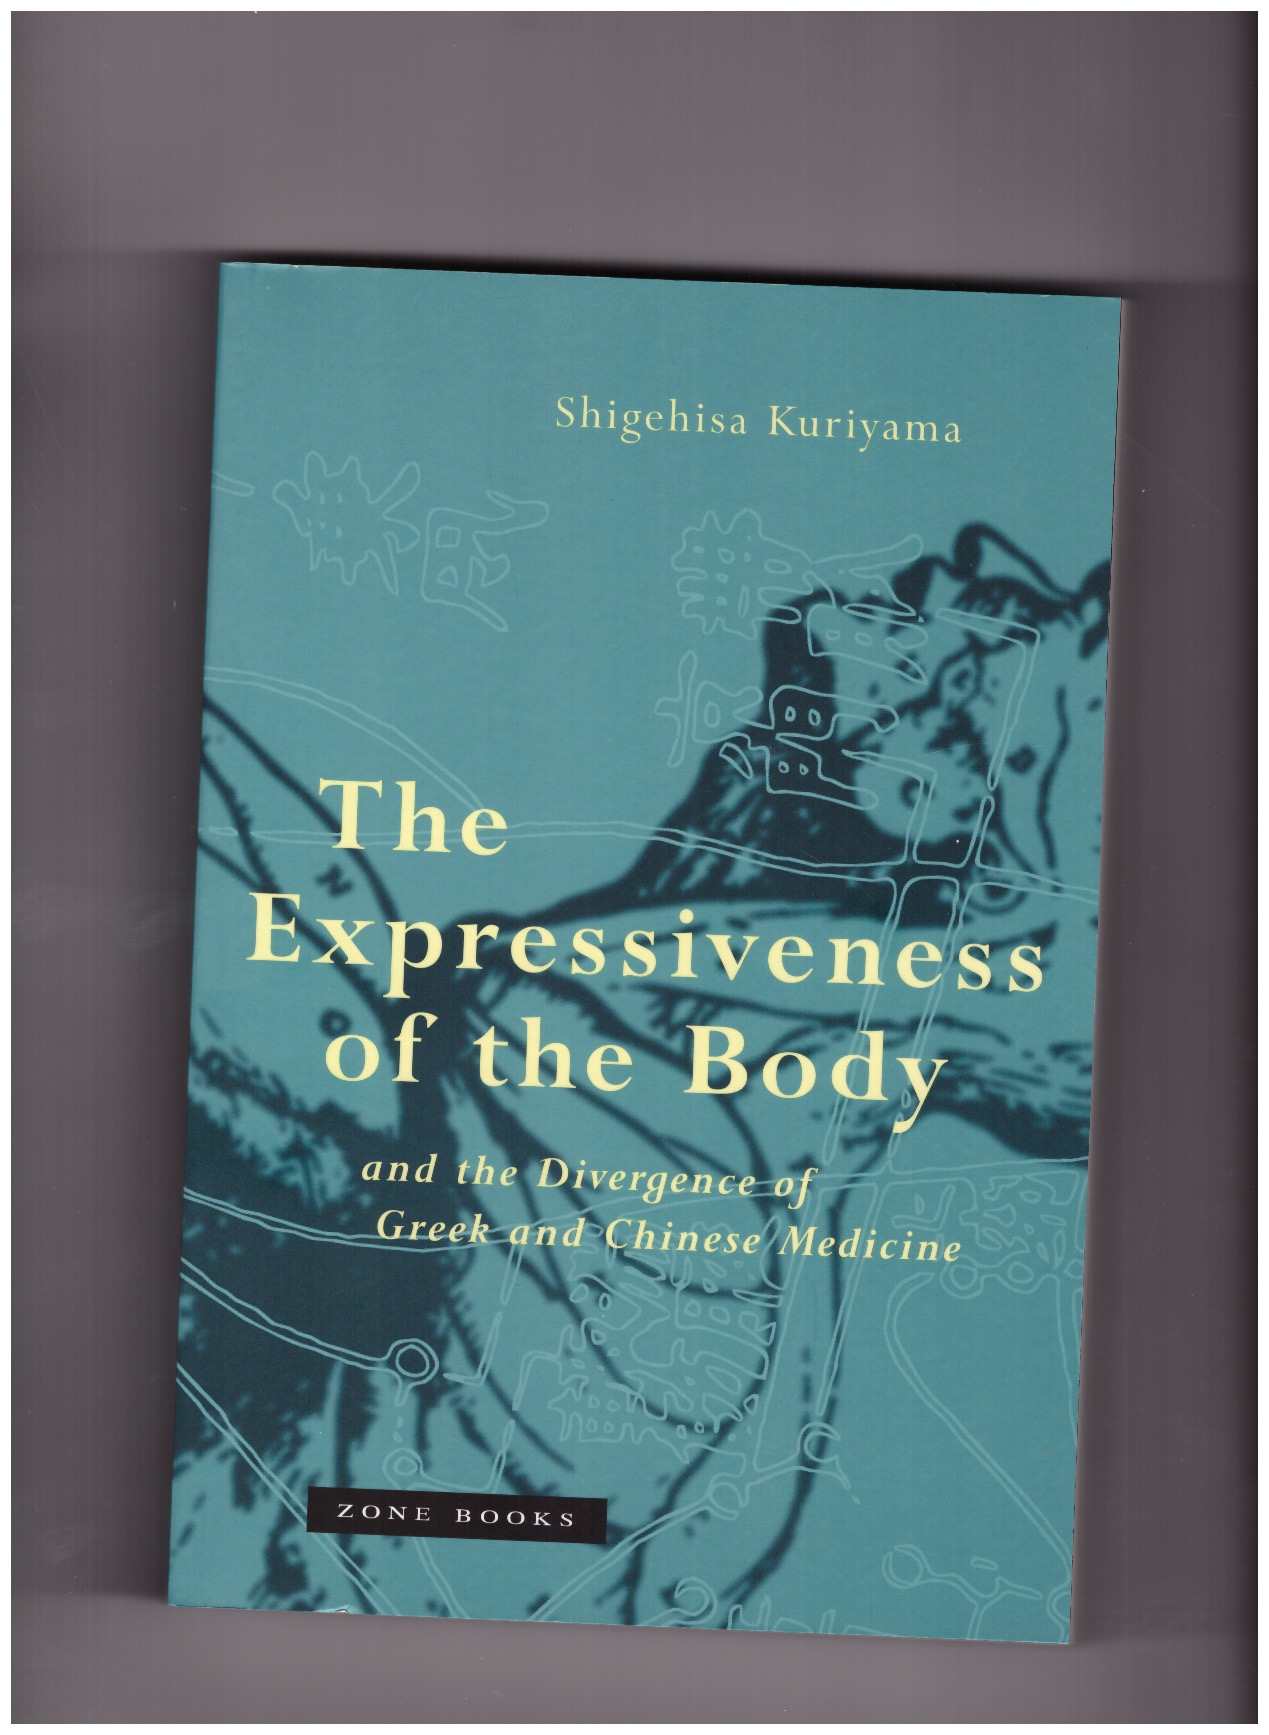 KURIYAMA, Shigehisa - The Expressiveness of the Body and the Divergence of Greek and Chinese Medicine